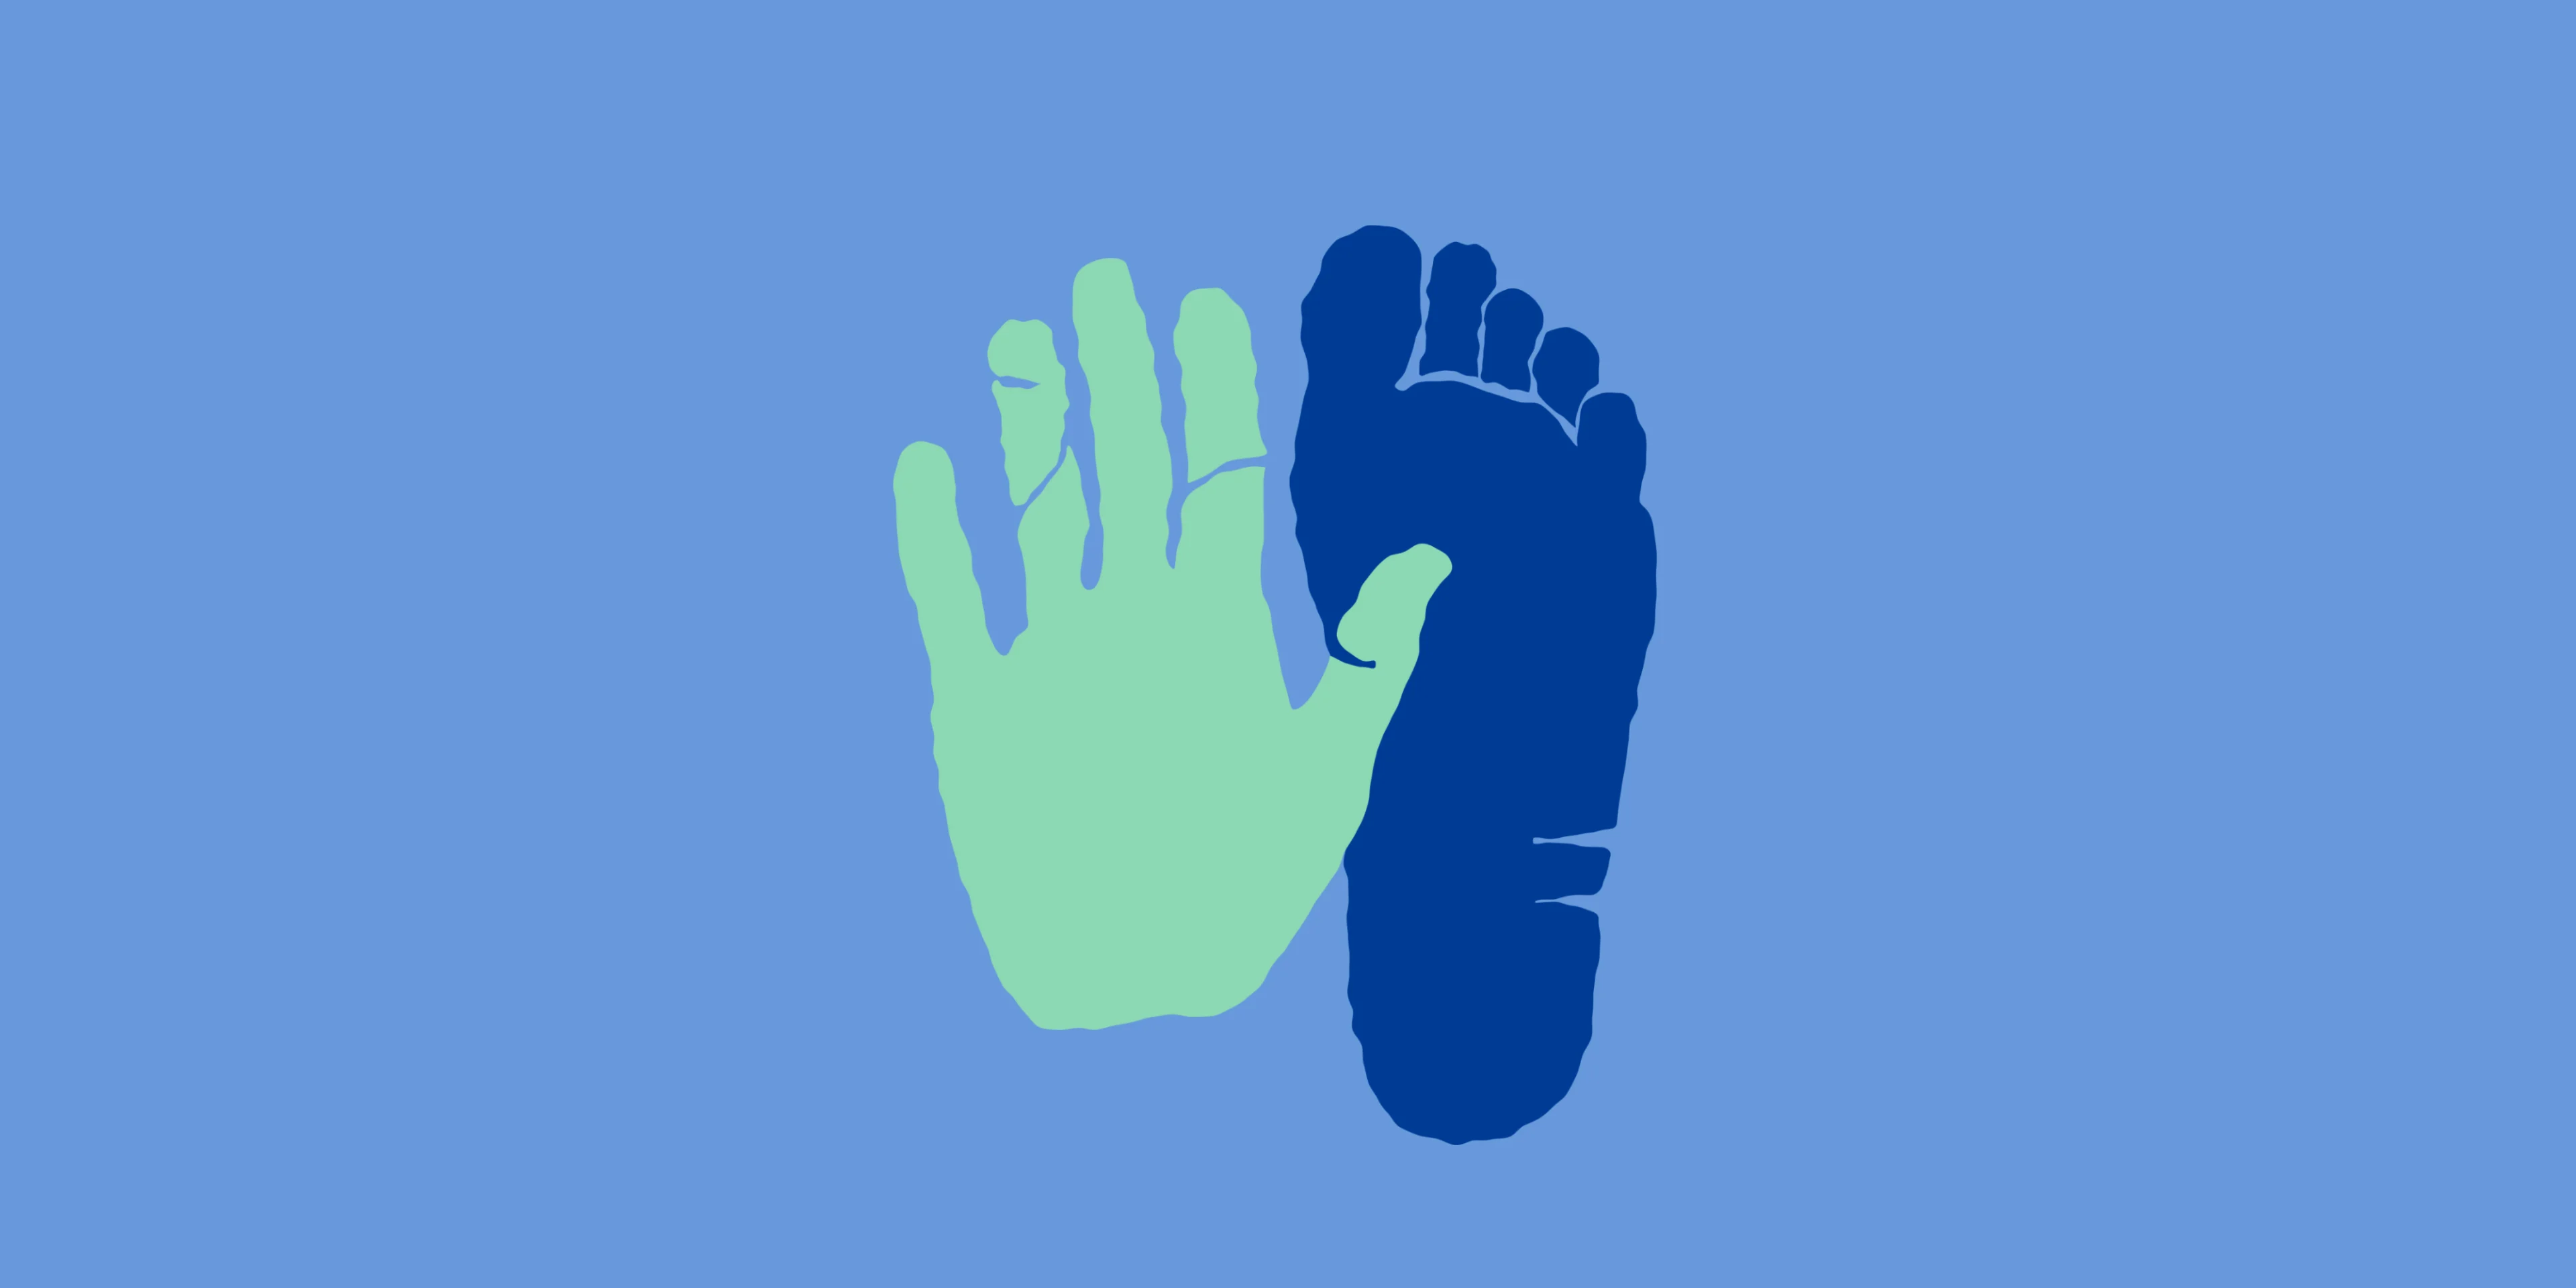 handprint and footprint